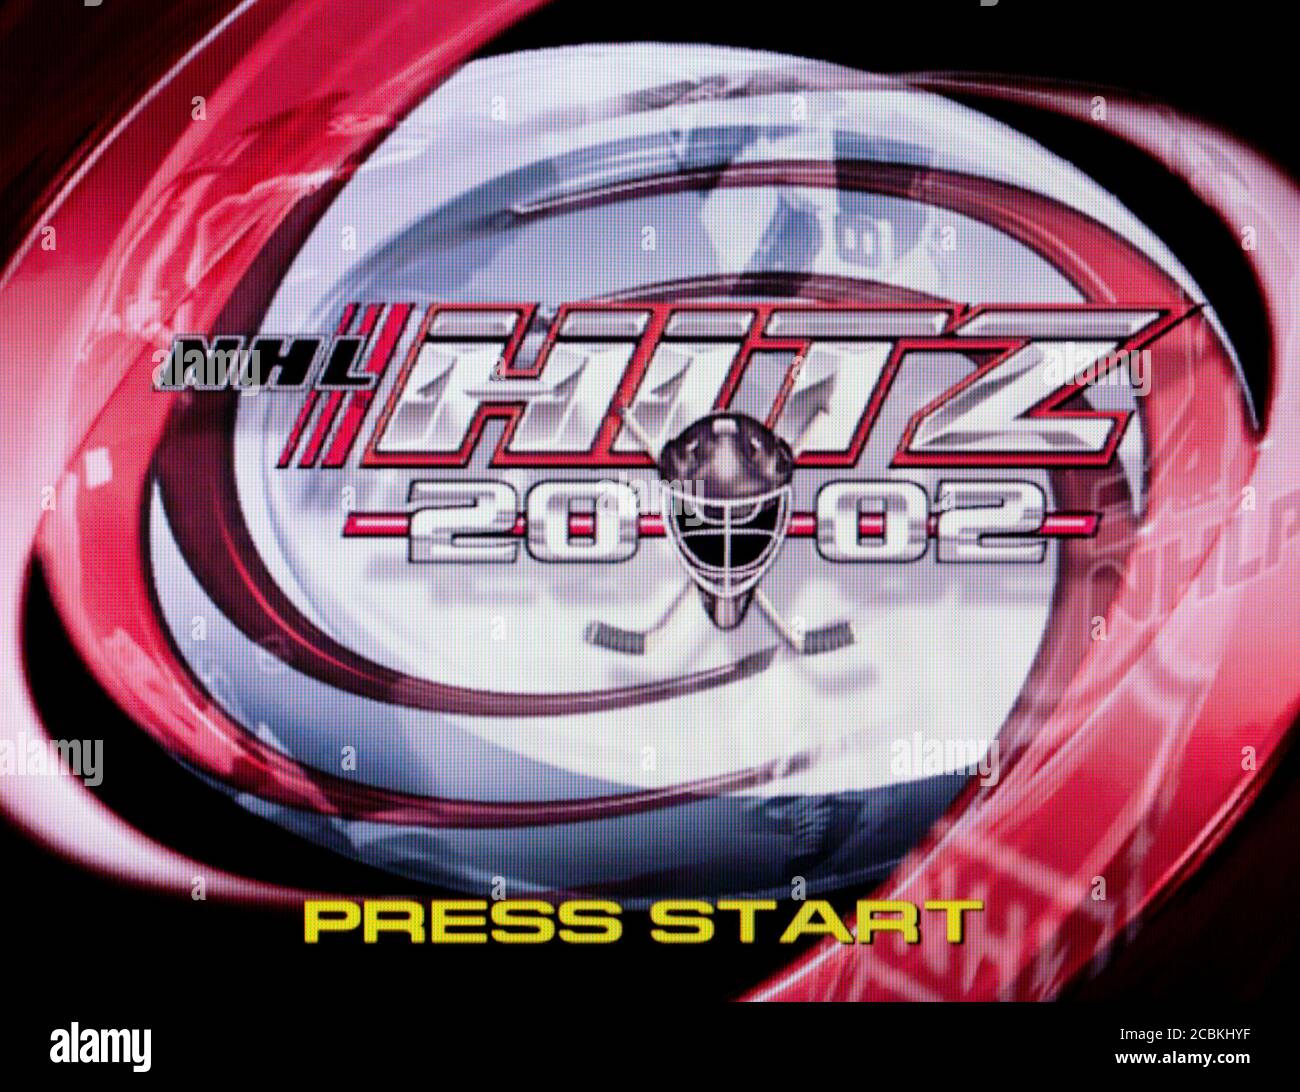 NHL Hitz 2002 - Nintendo Gamecube Videogame - Editorial use only Stock Photo